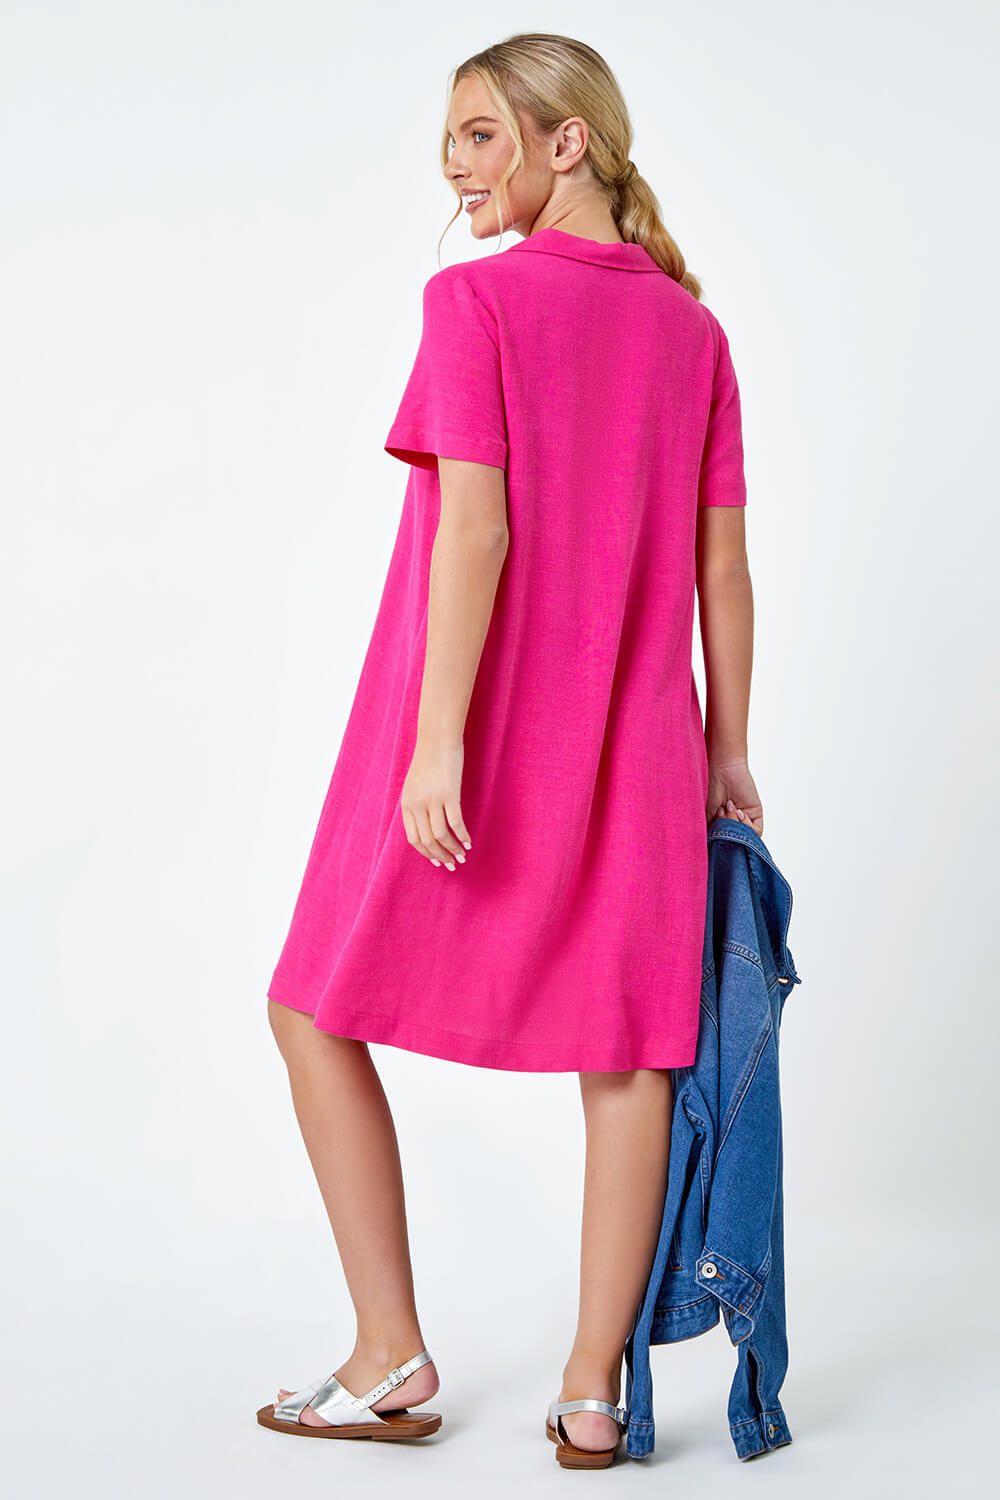 PINK Petite Linen Blend Pocket Tunic Dress, Image 3 of 5